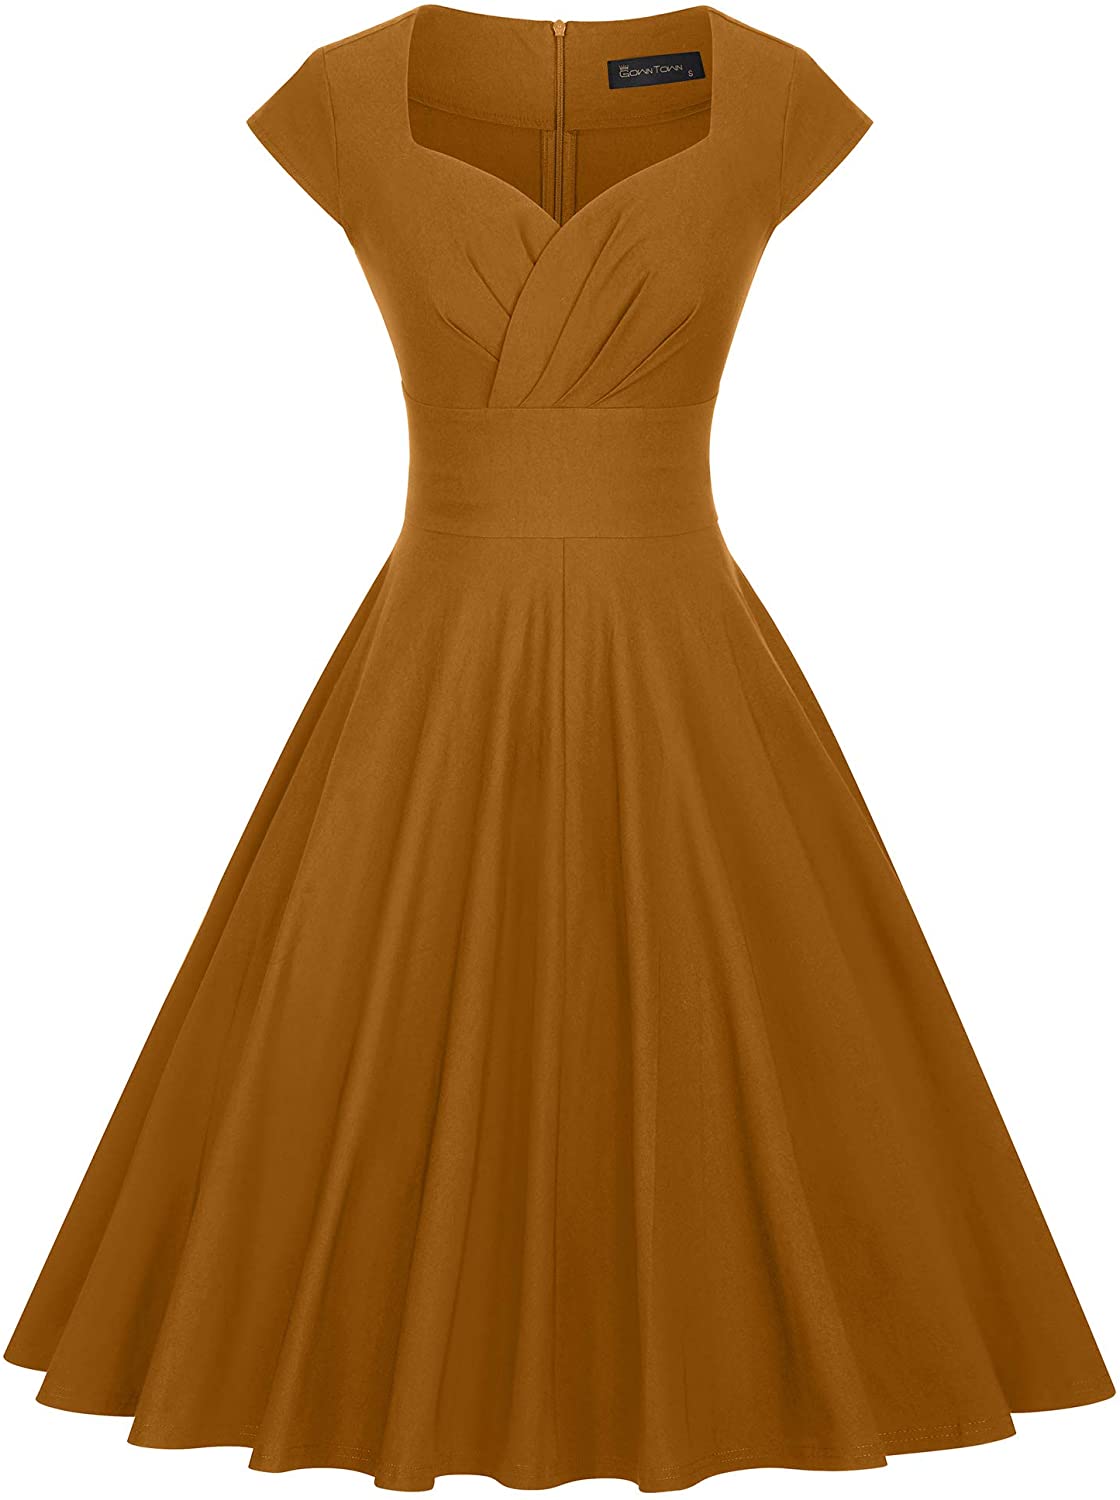 GownTown Womens Dresses Party Dresses 1950s Vintage Dresses Swing 